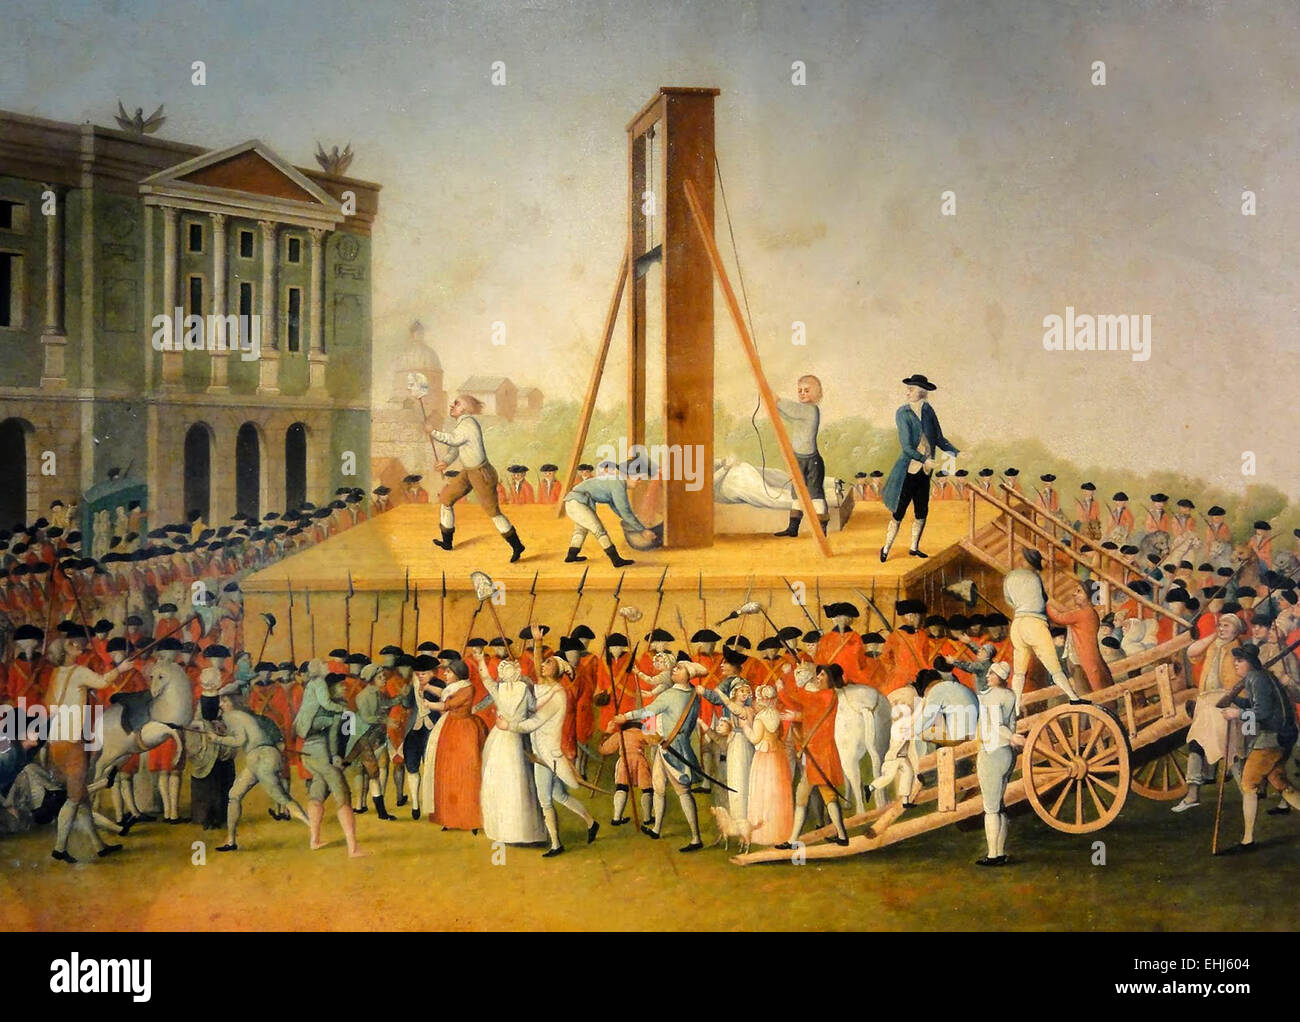 Marie Antoinette's execution in 1793 at the Place de la Révolution, France Stock Photo